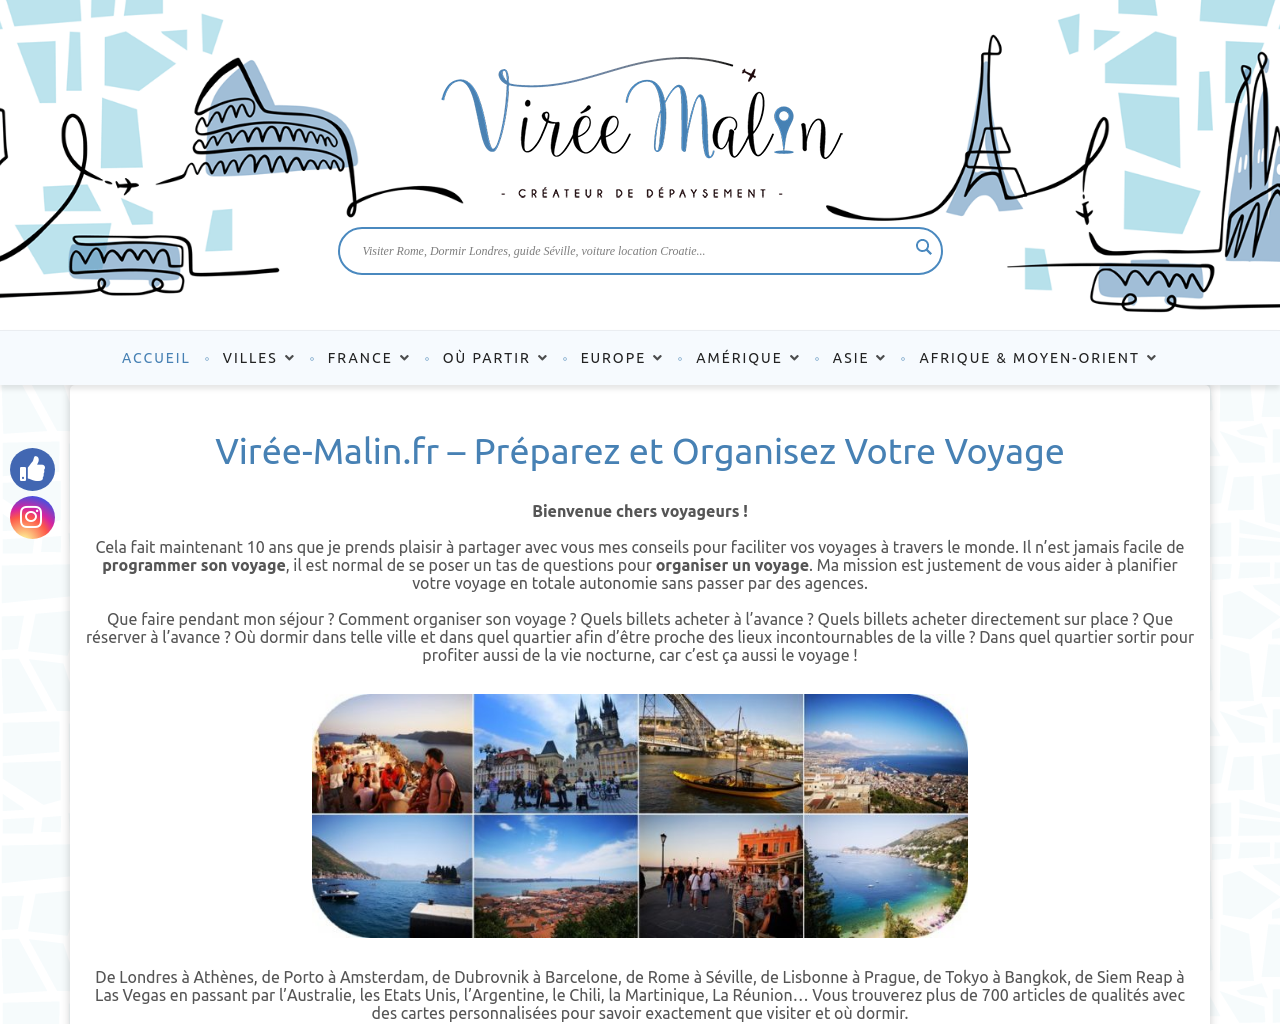 www.viree-malin.fr